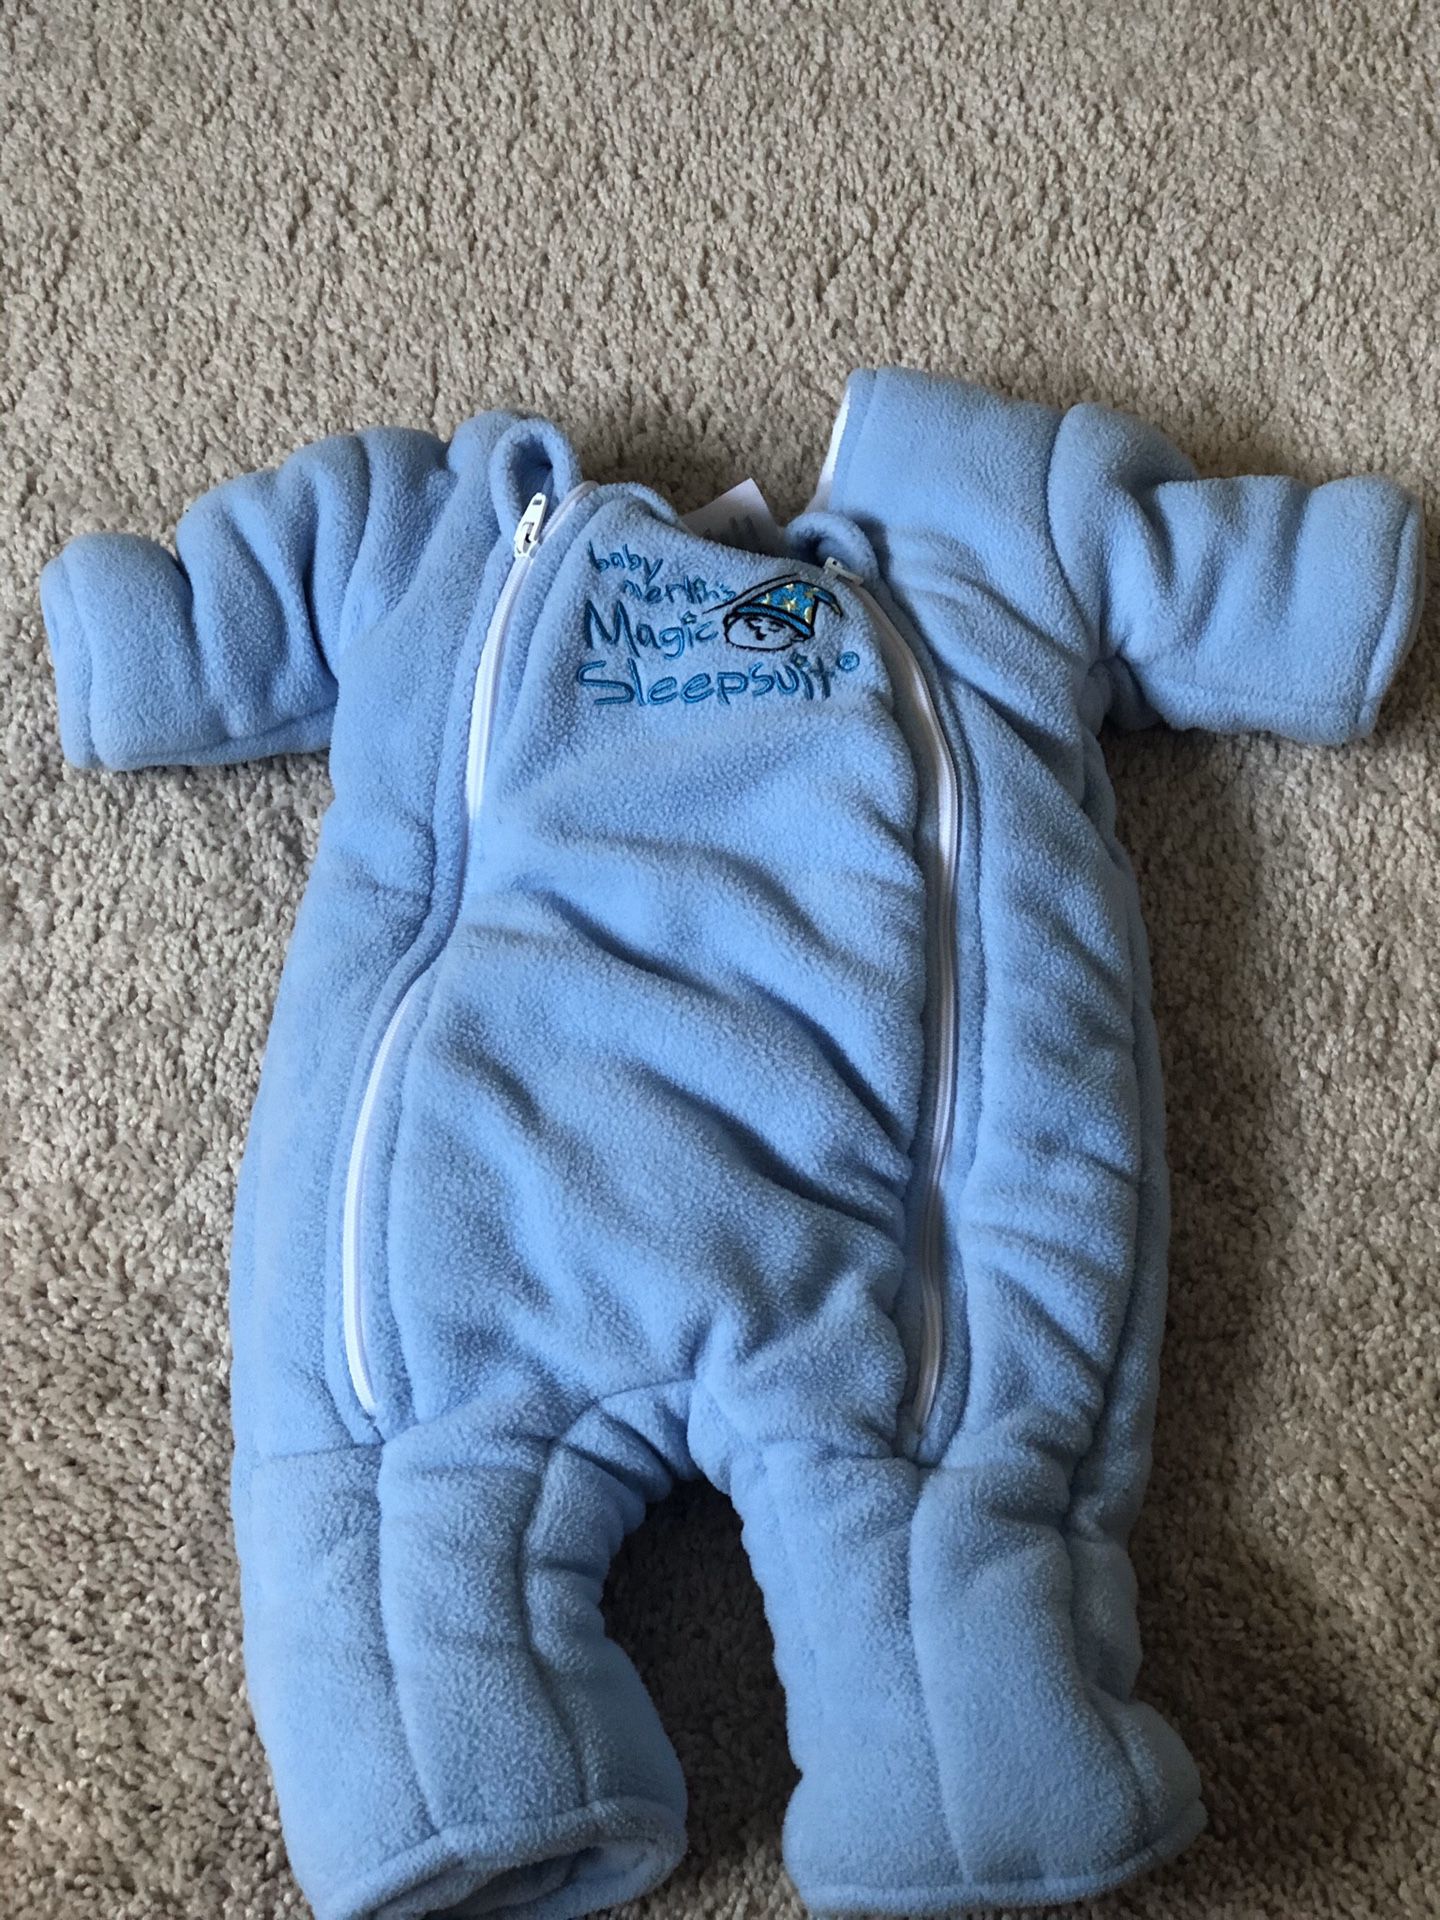 Baby Merlin’s Magic Sleep Suit Size Small